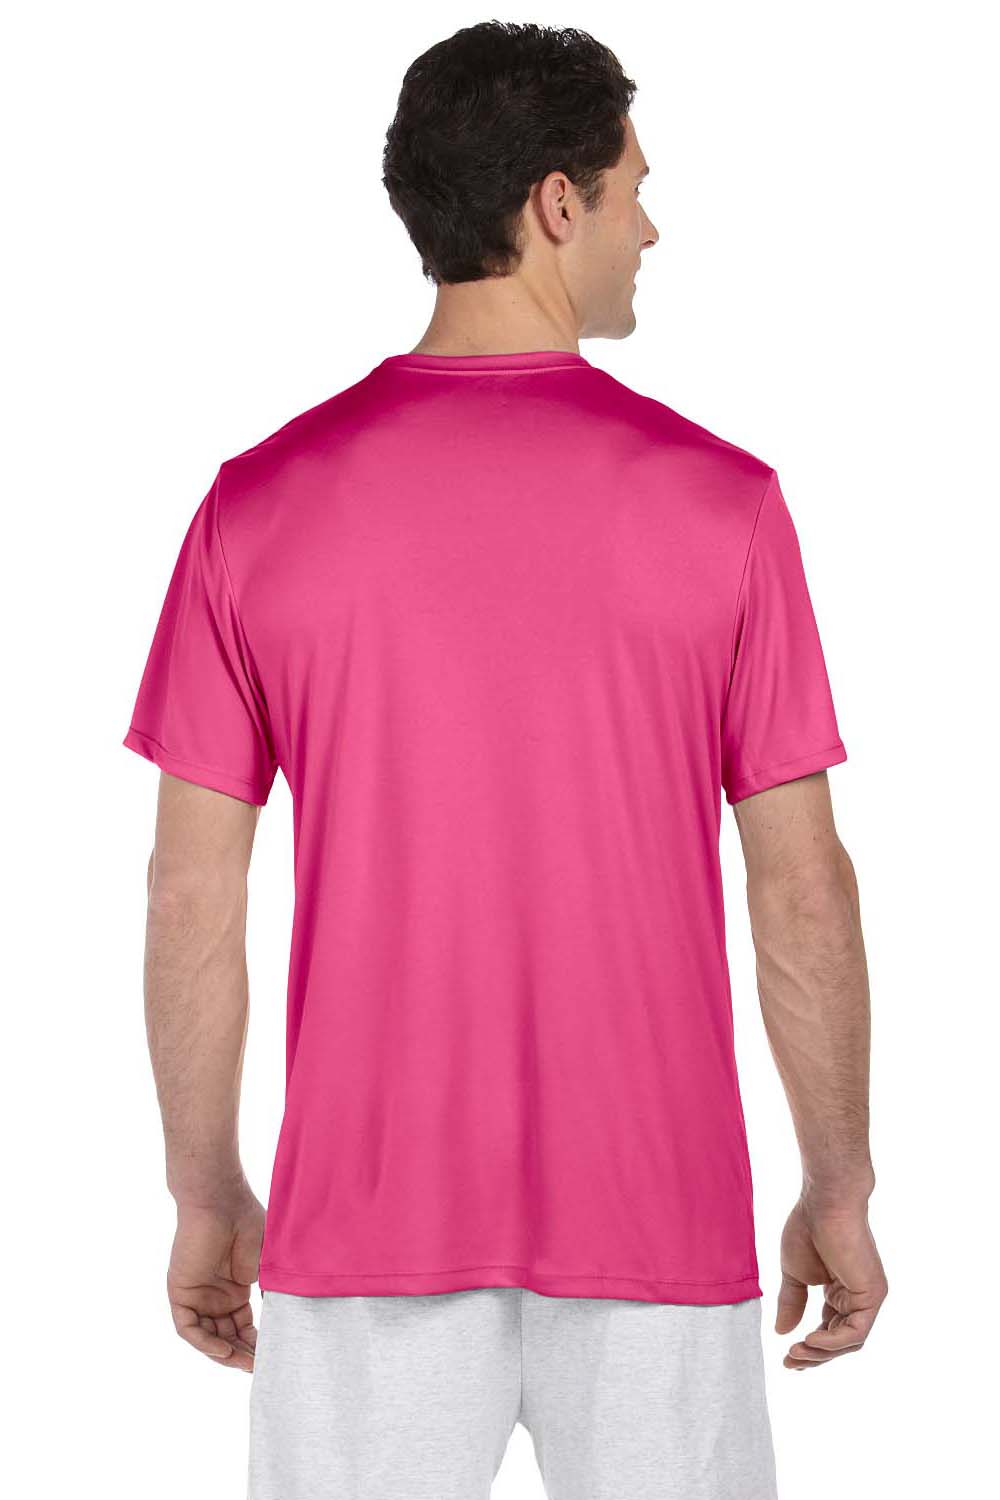 Hanes 4820 Mens Cool DRI FreshIQ Moisture Wicking Short Sleeve Crewneck T-Shirt Wow Pink Back